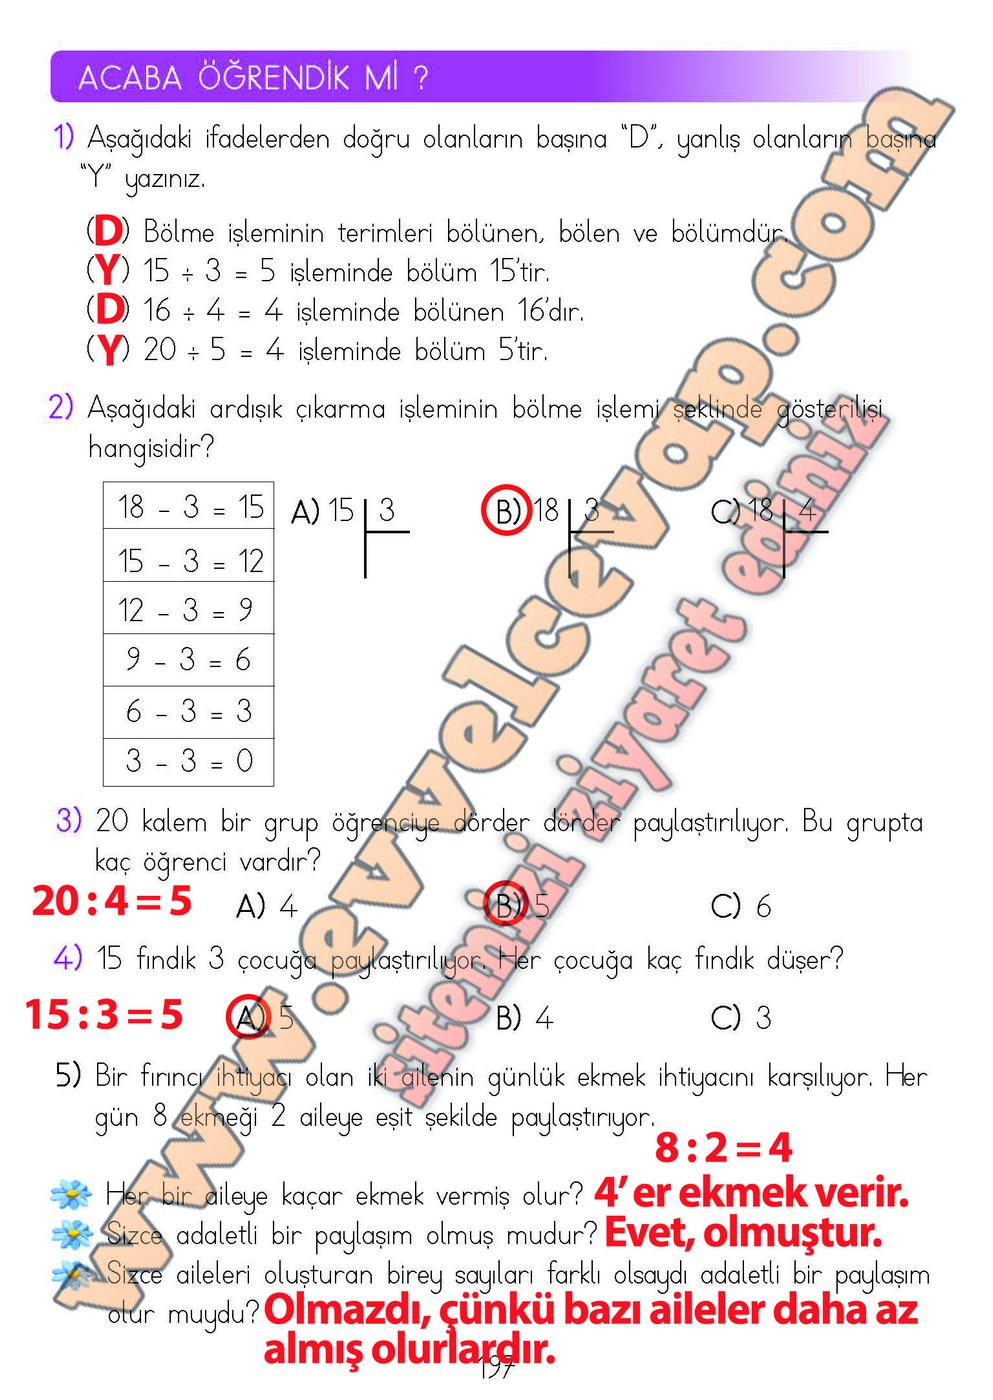 2 Sinif Matematik Meb Yayinlari Ders Kitabi Cevaplari Sayfa 197